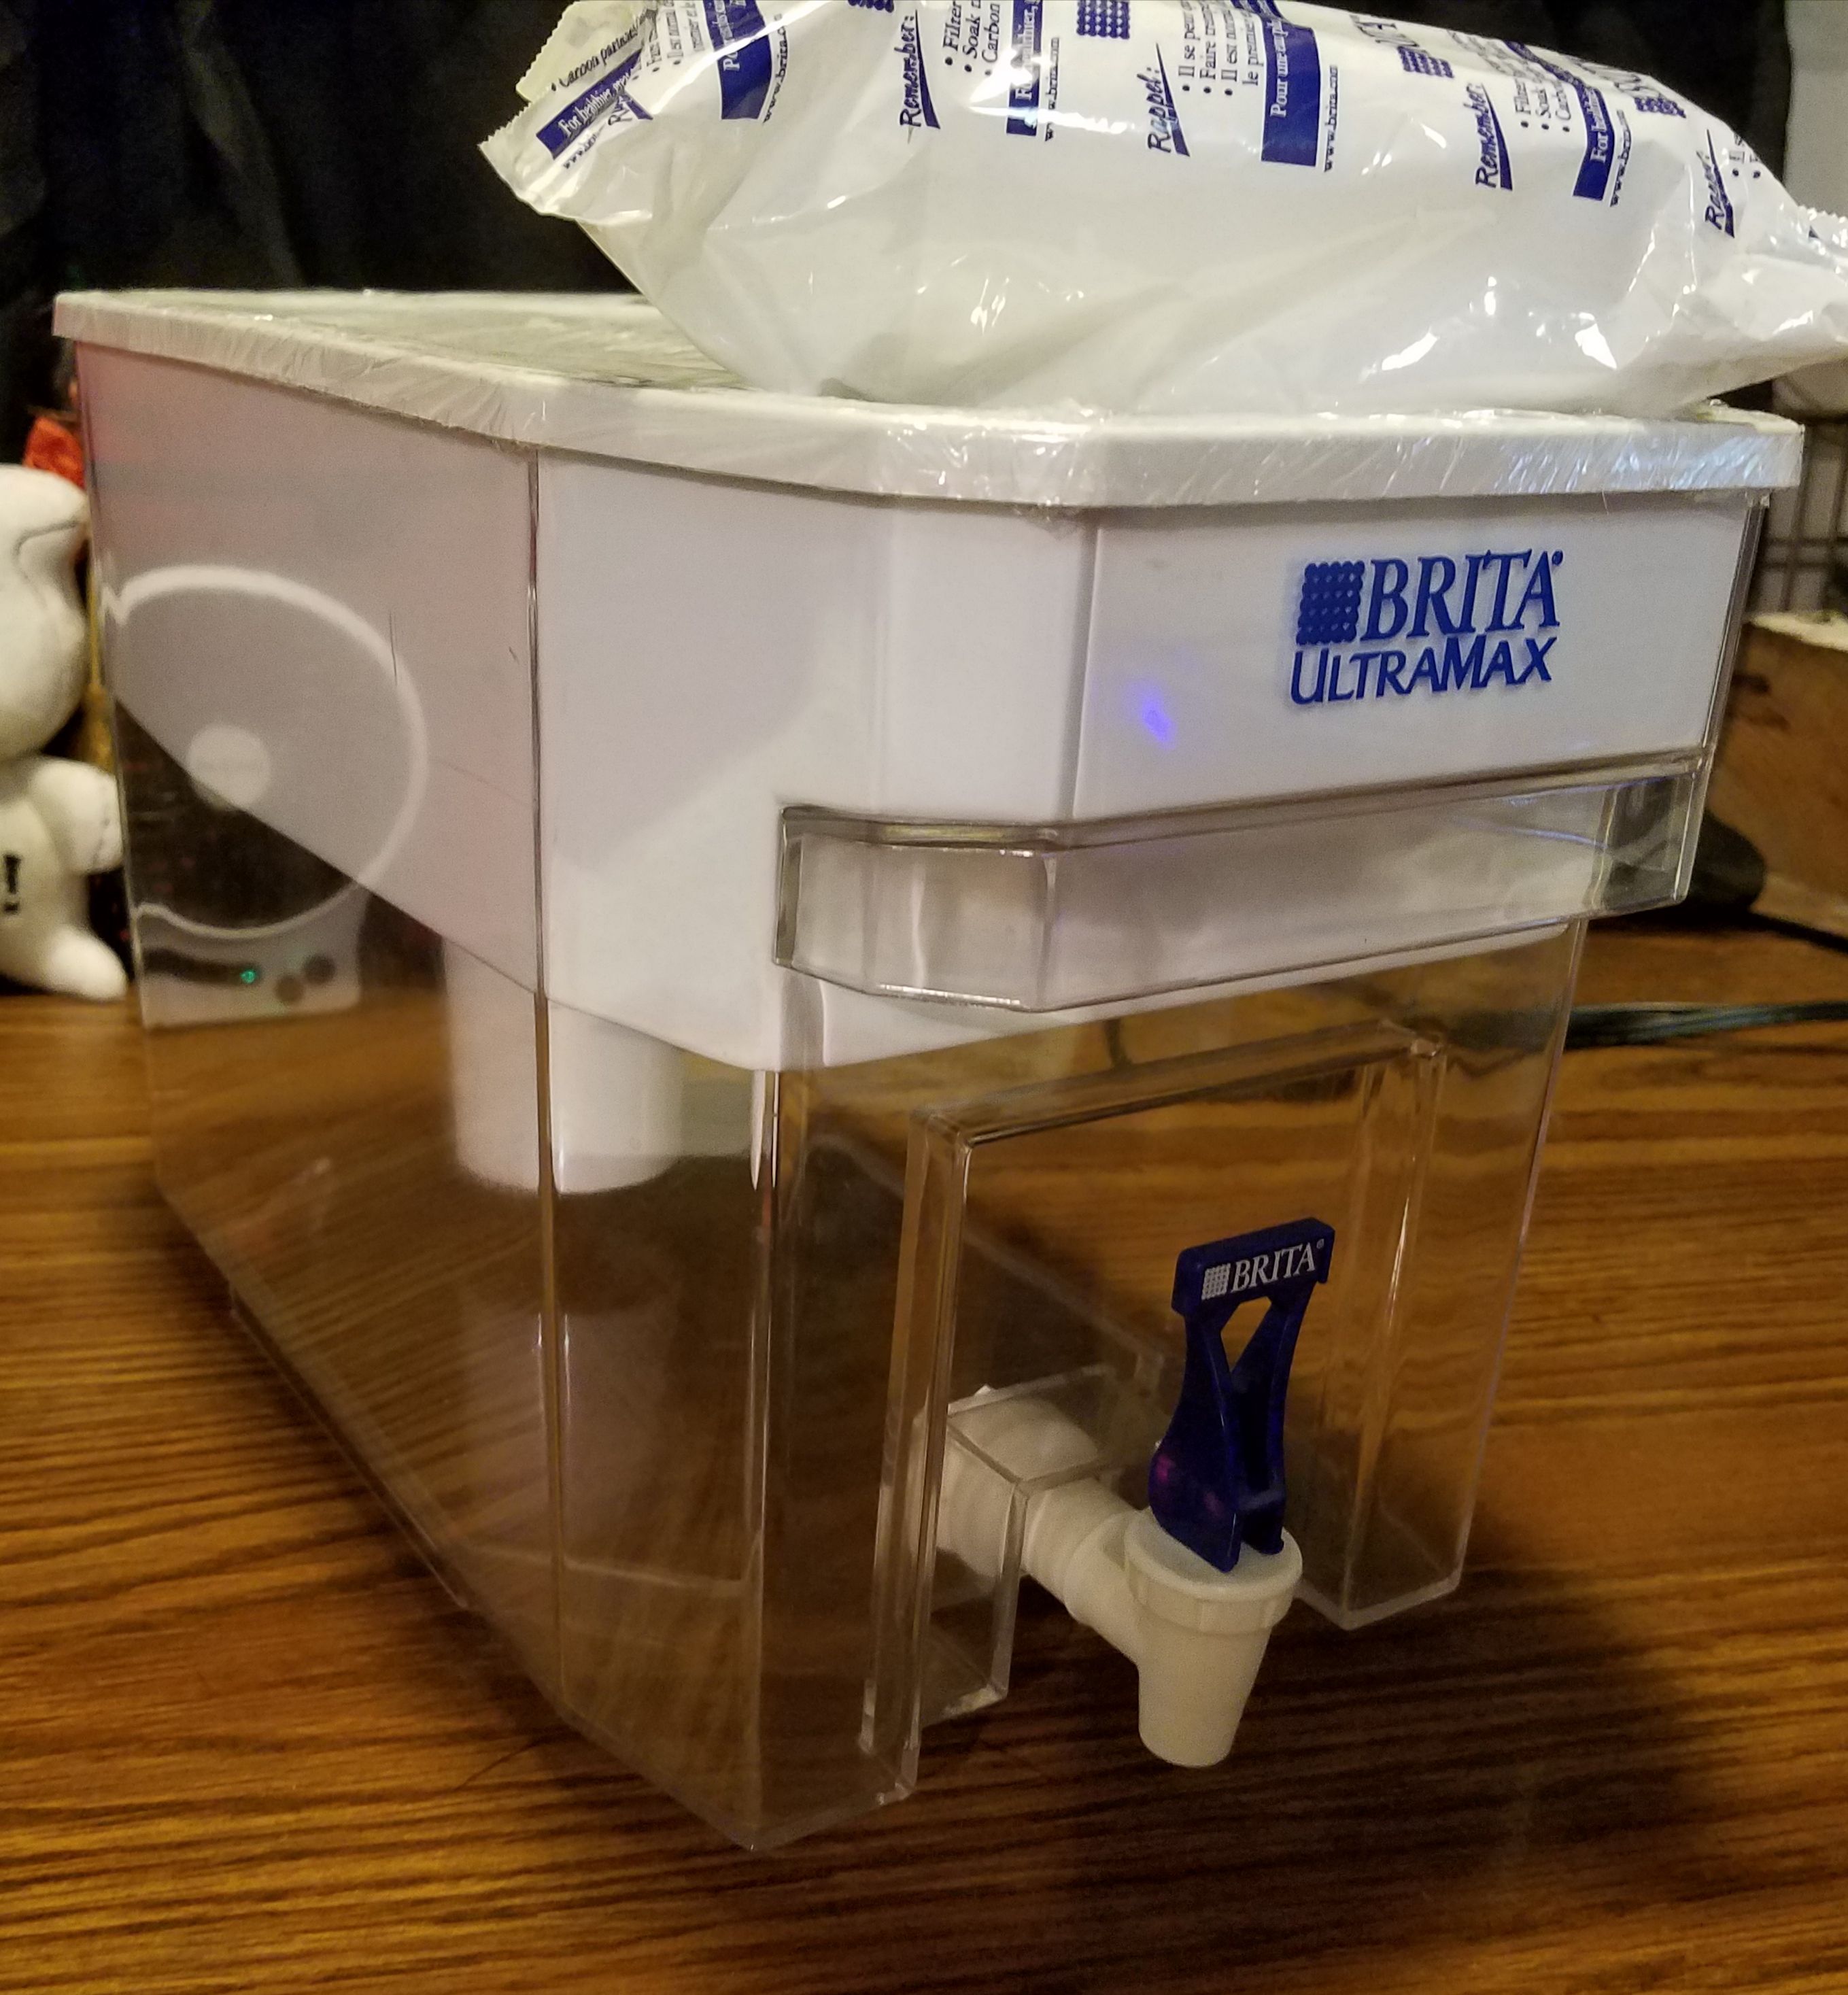 Brita ultramax water filter pitcher with filter